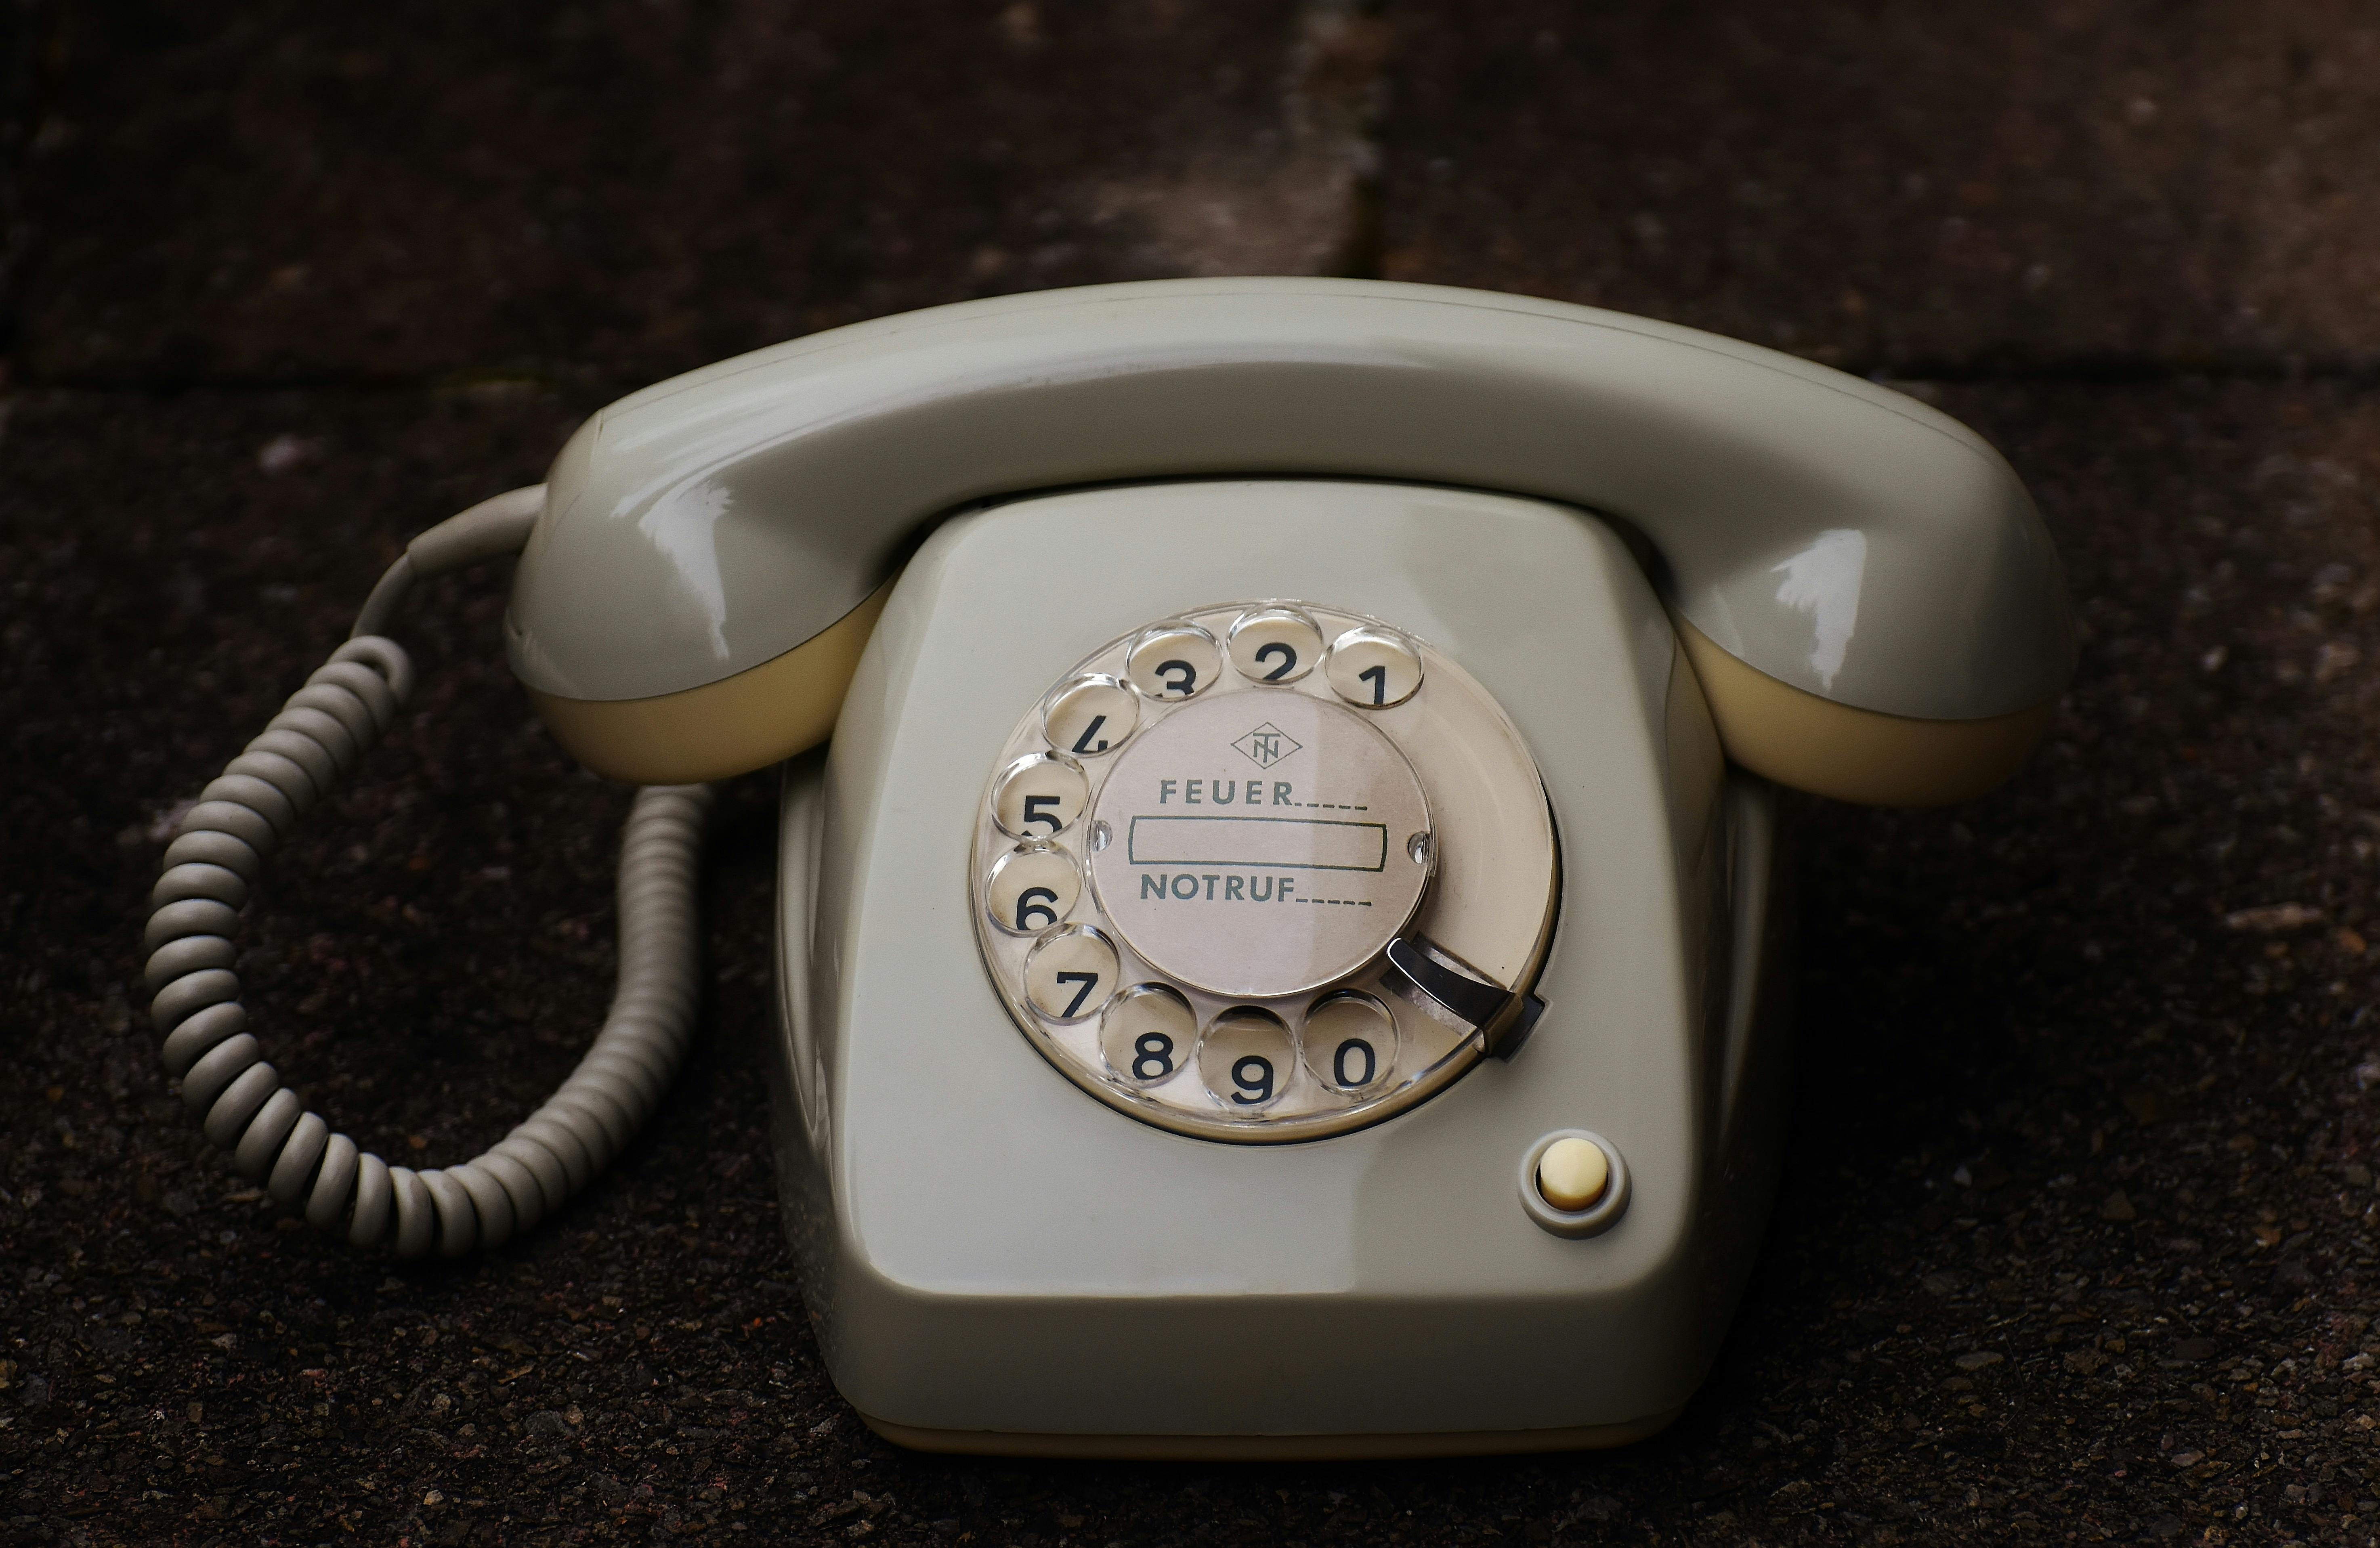 Telefono Antiguo Teléfono De - Foto gratis en Pixabay - Pixabay